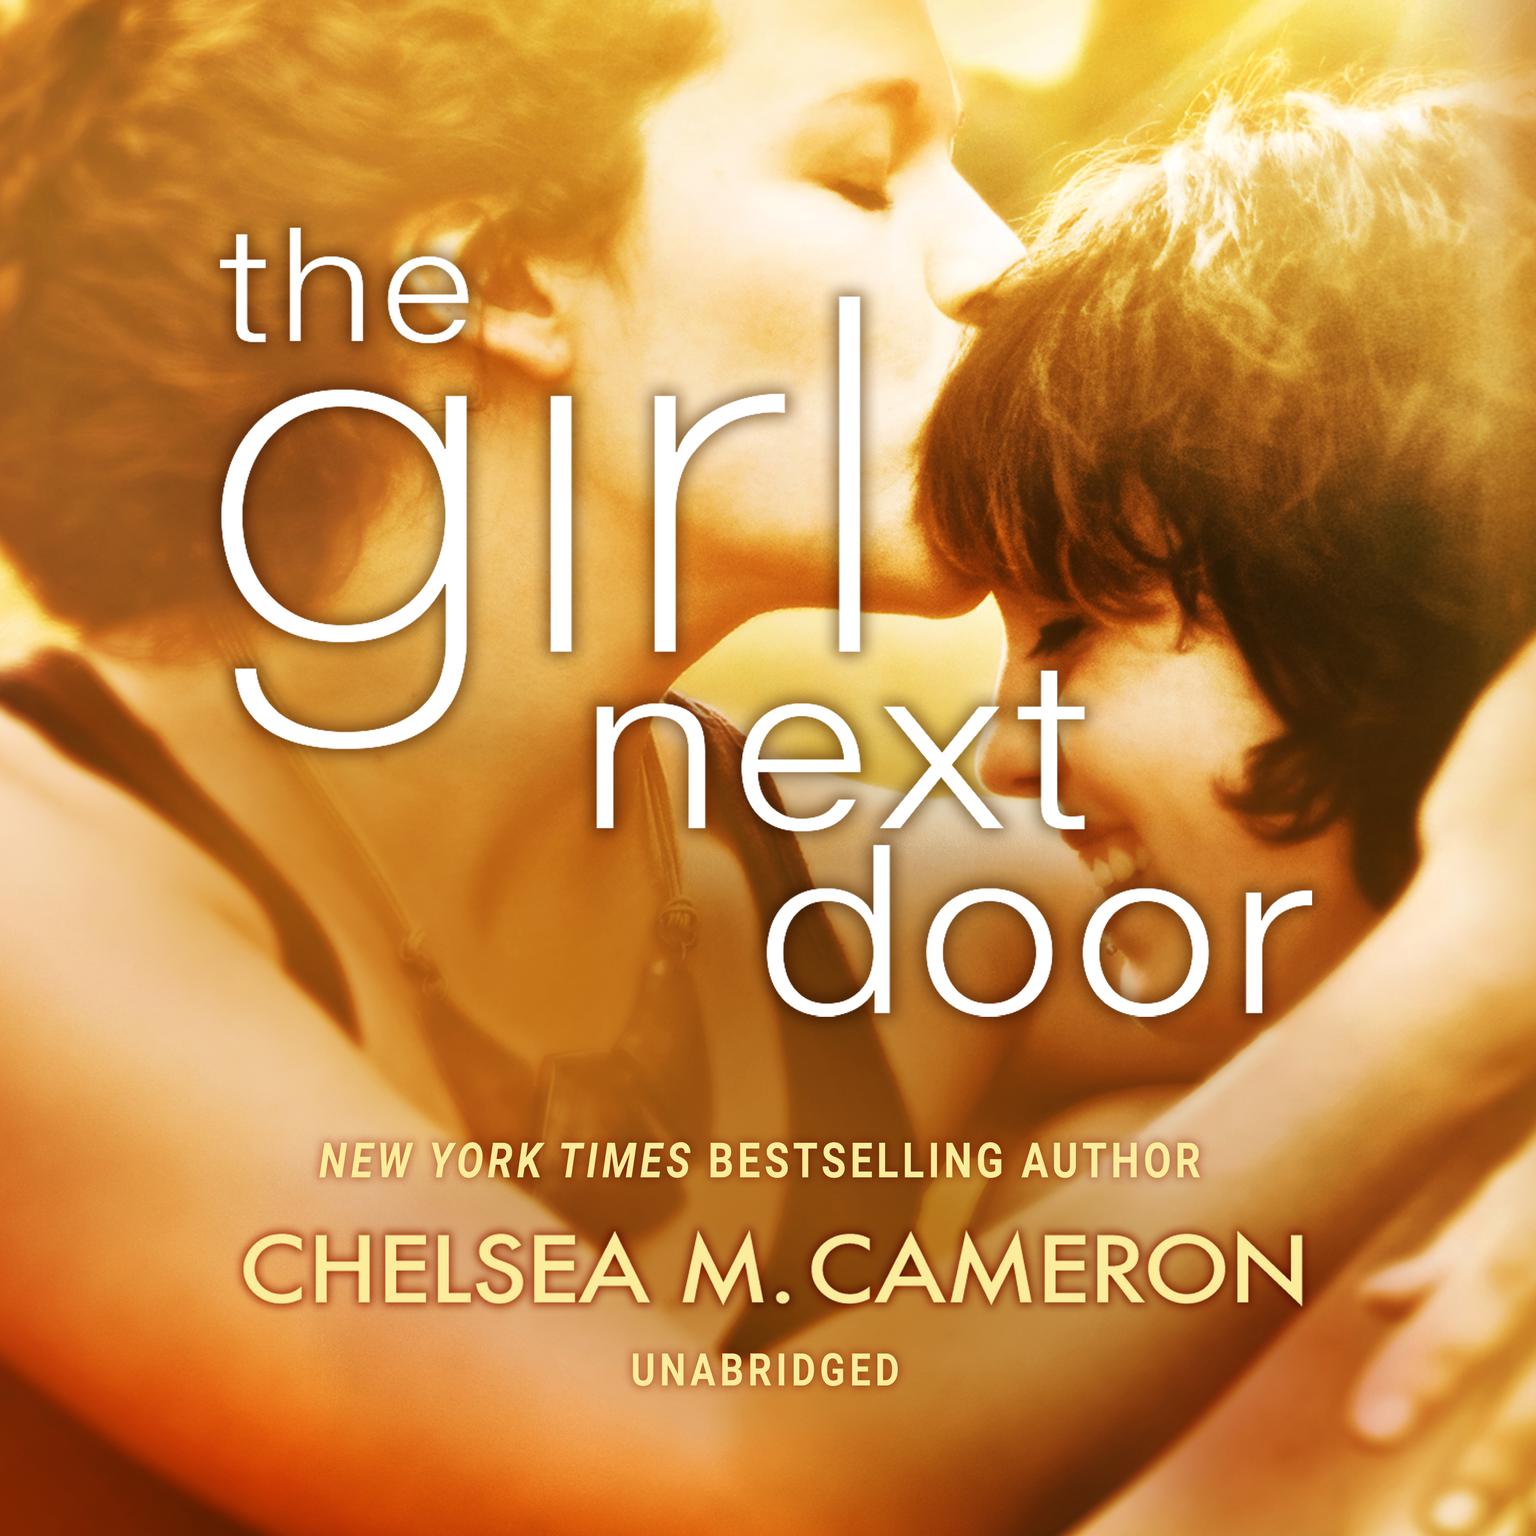 Chelsea M. Cameron: The Girl Next Door (AudiobookFormat, 2020, Harlequin Audio and Blackstone Publishing)